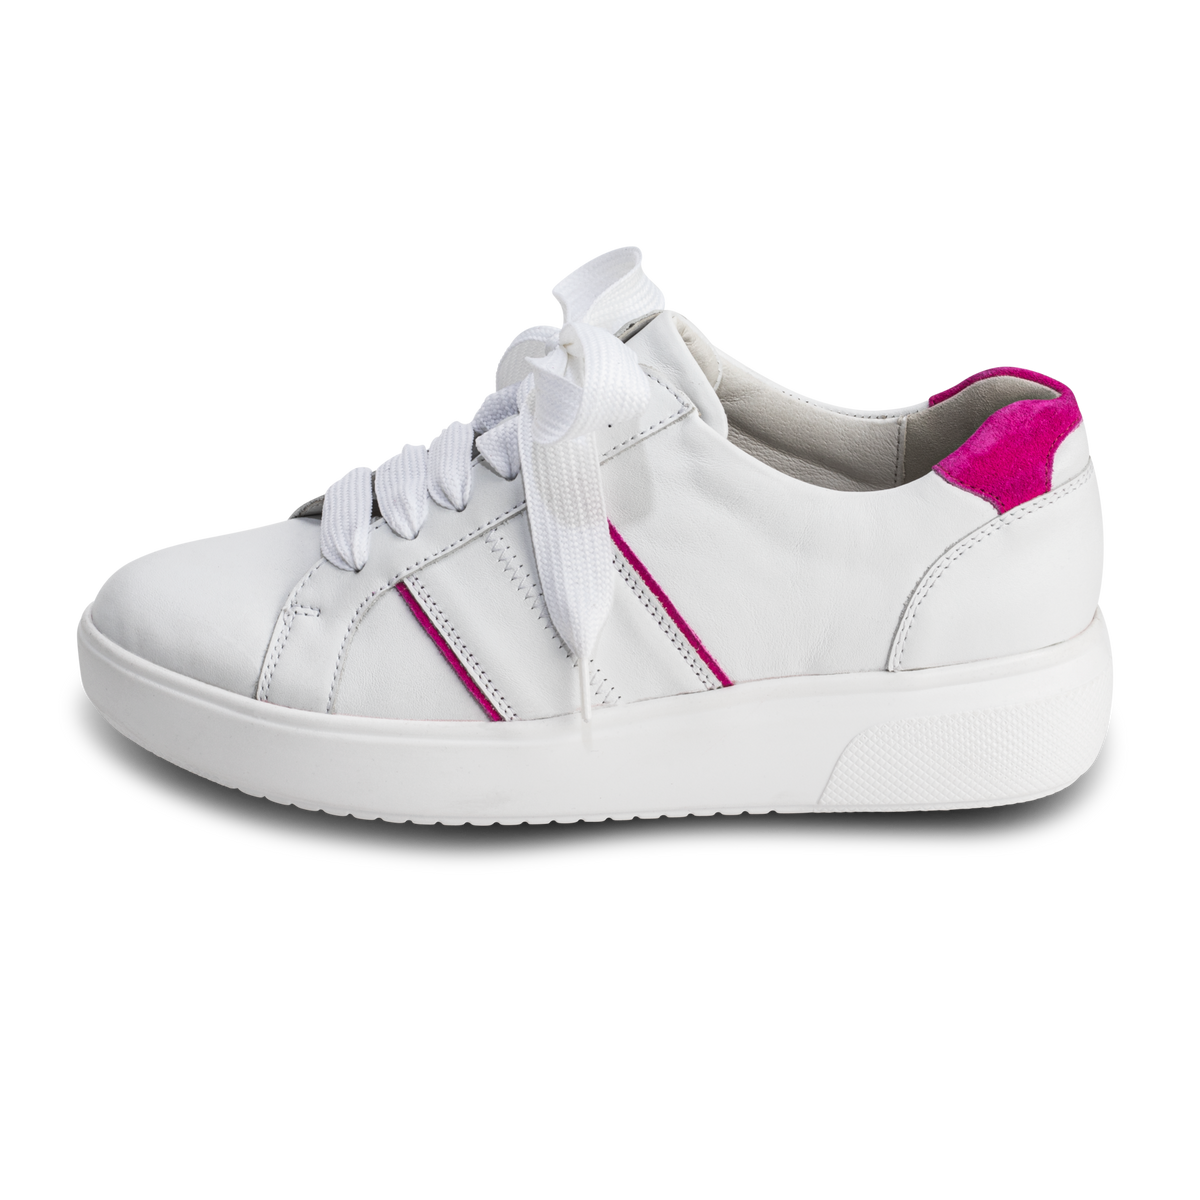 indrukwekkende sneaker nappaleer wit/roze